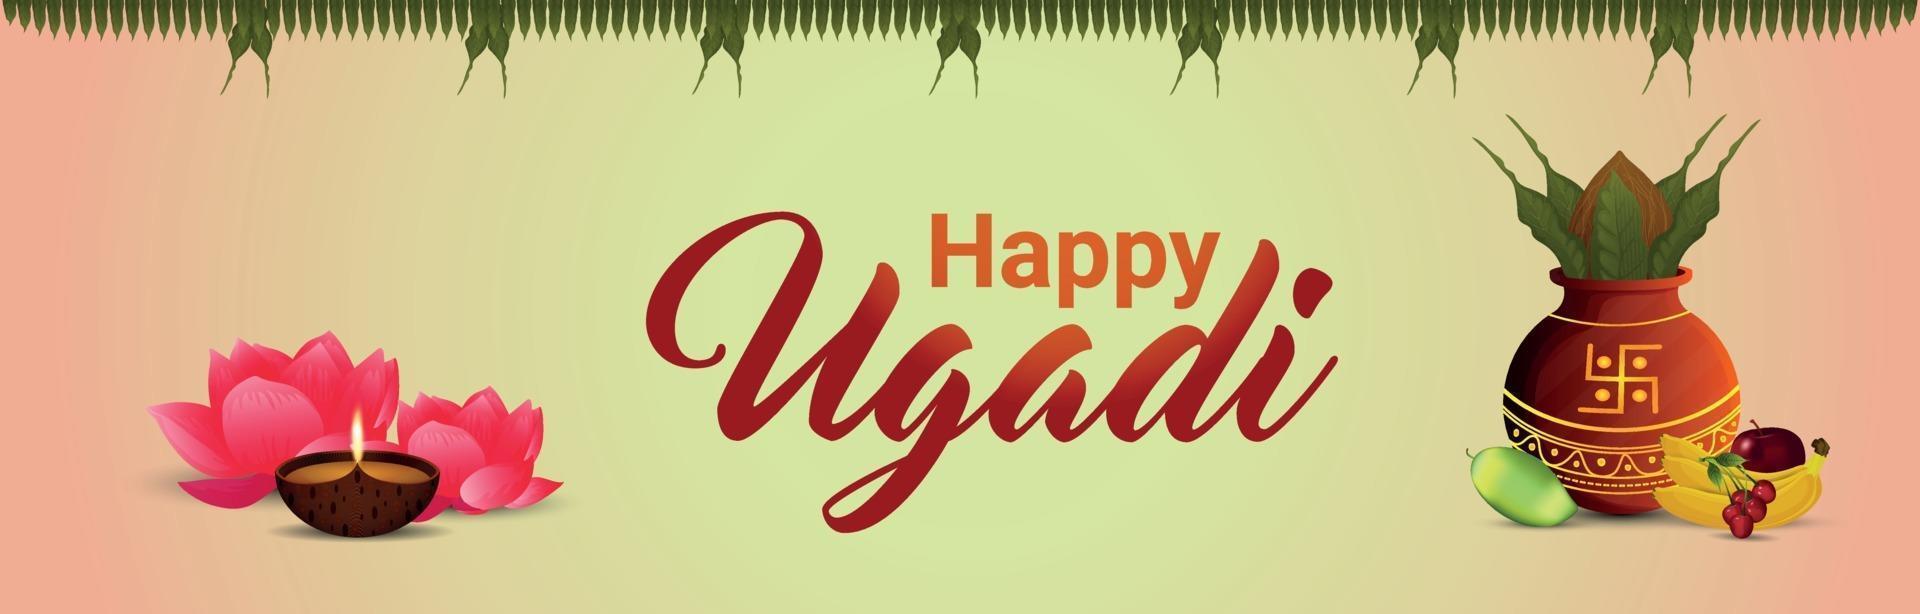 happy gudi padwa ou happy ugadi banner ou header vetor